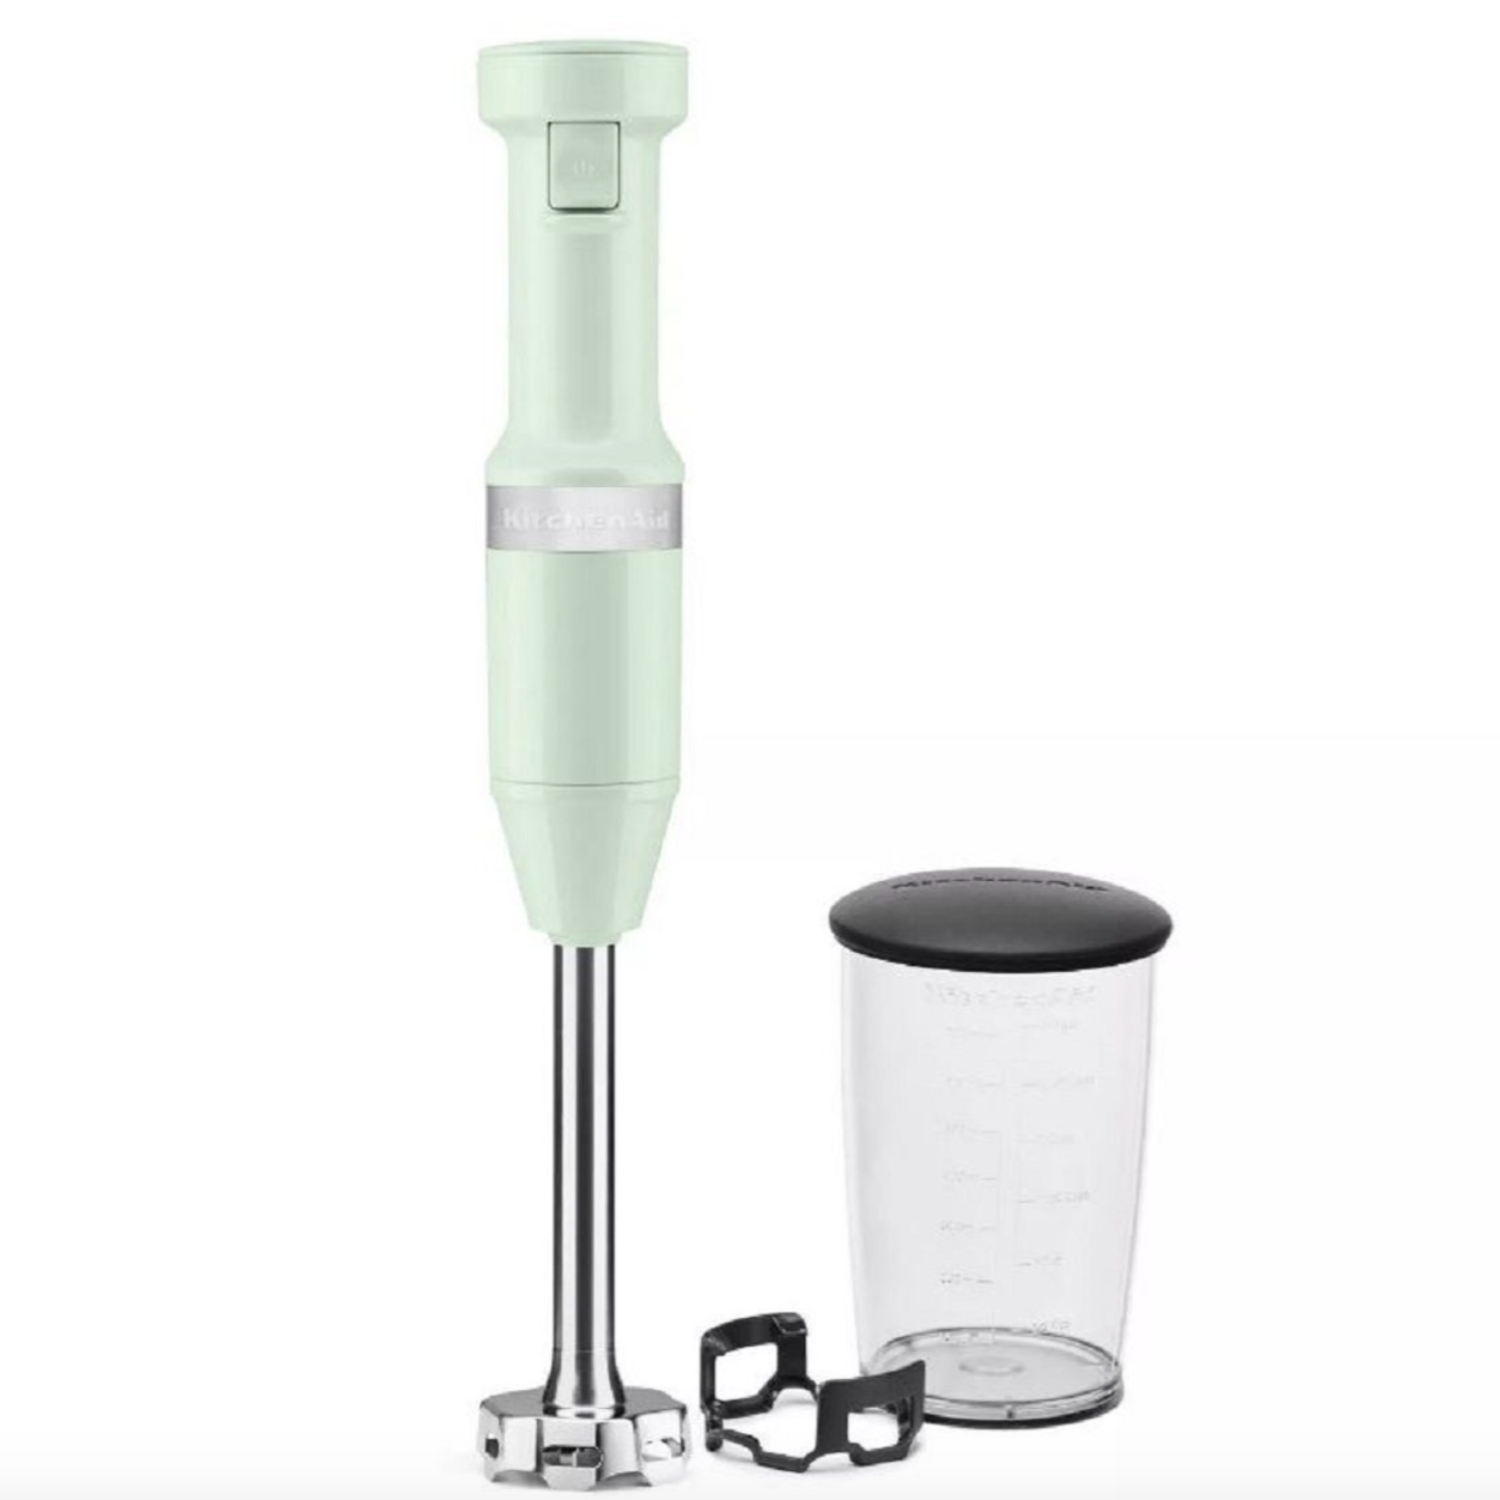 Plastic Power Blender For Kitchen Food Mixers Kitchenn Aid